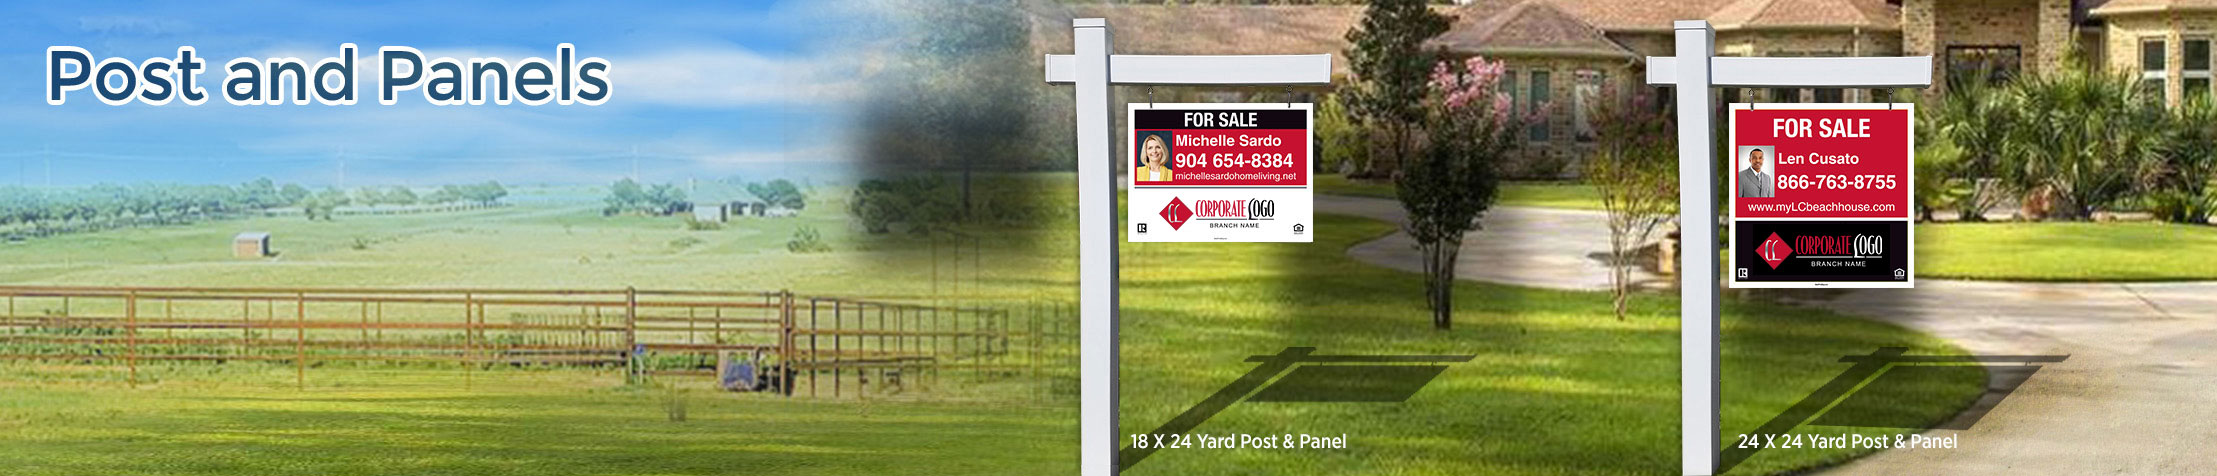 HomeSmart Real Estate Post and Panel - HomeSmart Real Estate signs | BestPrintBuy.com